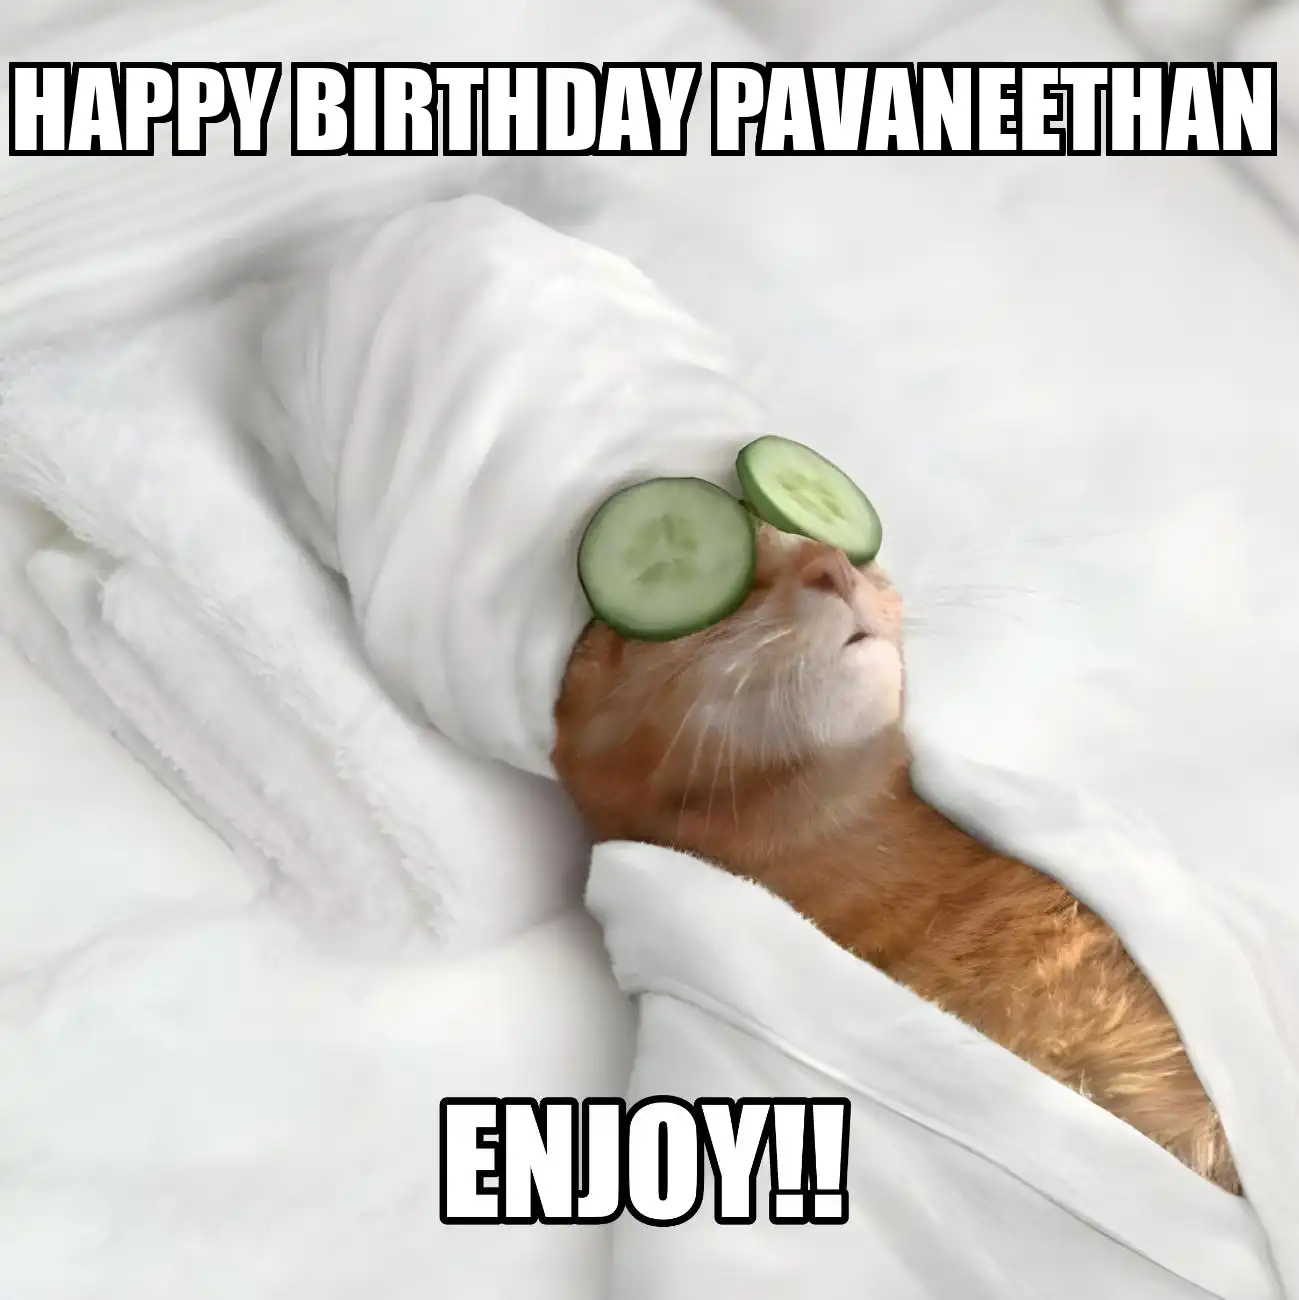 Happy Birthday Pavaneethan Enjoy Cat Meme